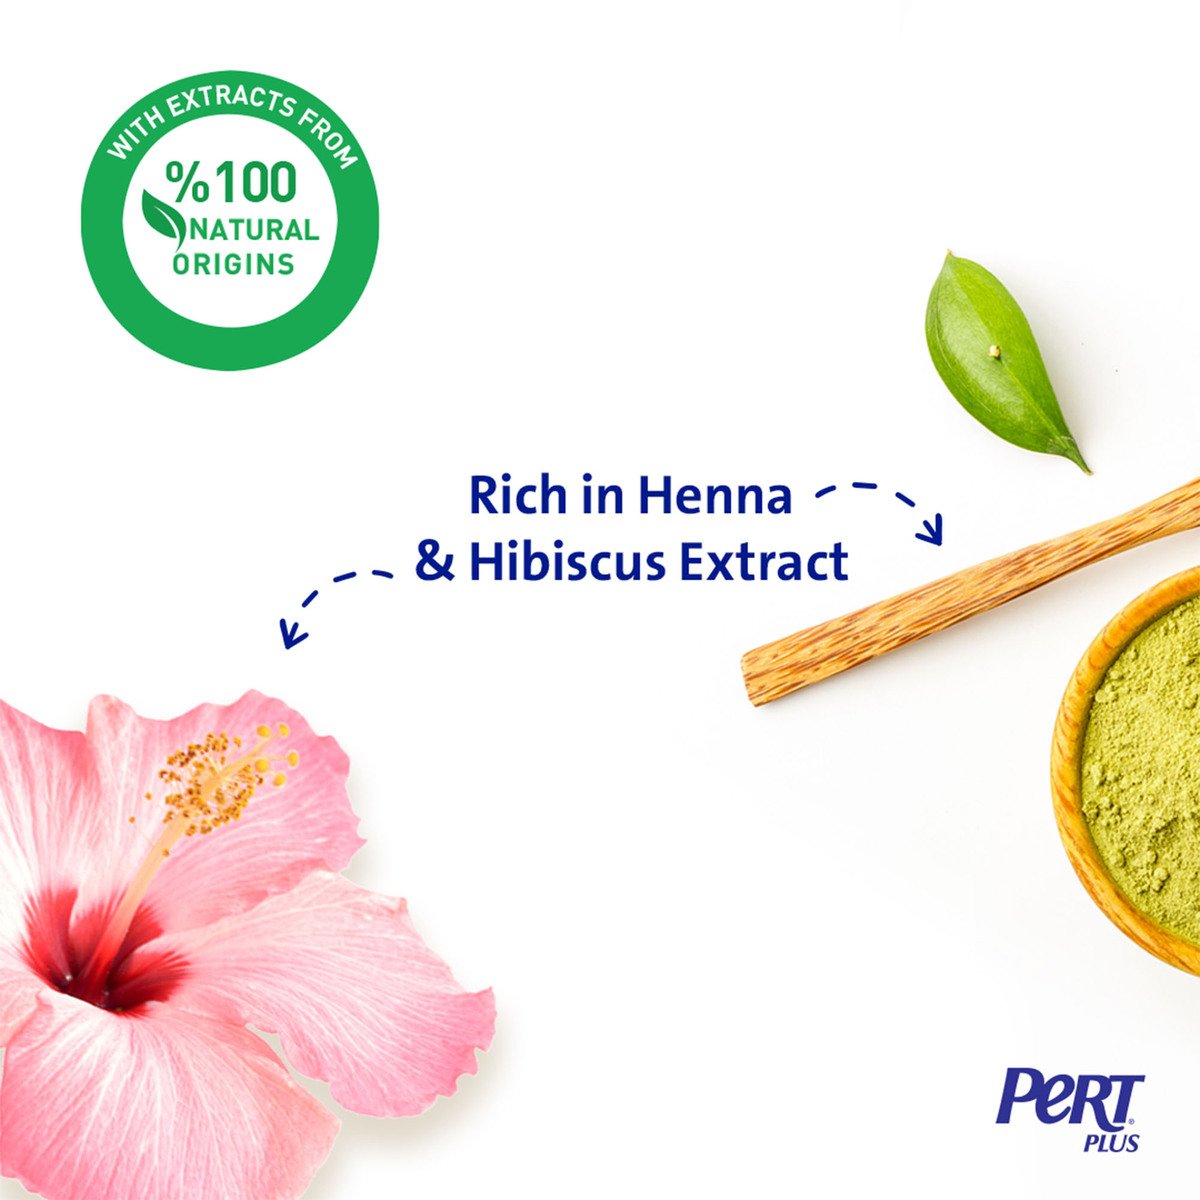 Pert Plus Strength & Shine Shampoo with Henna and Hibiscus Extract 400 ml